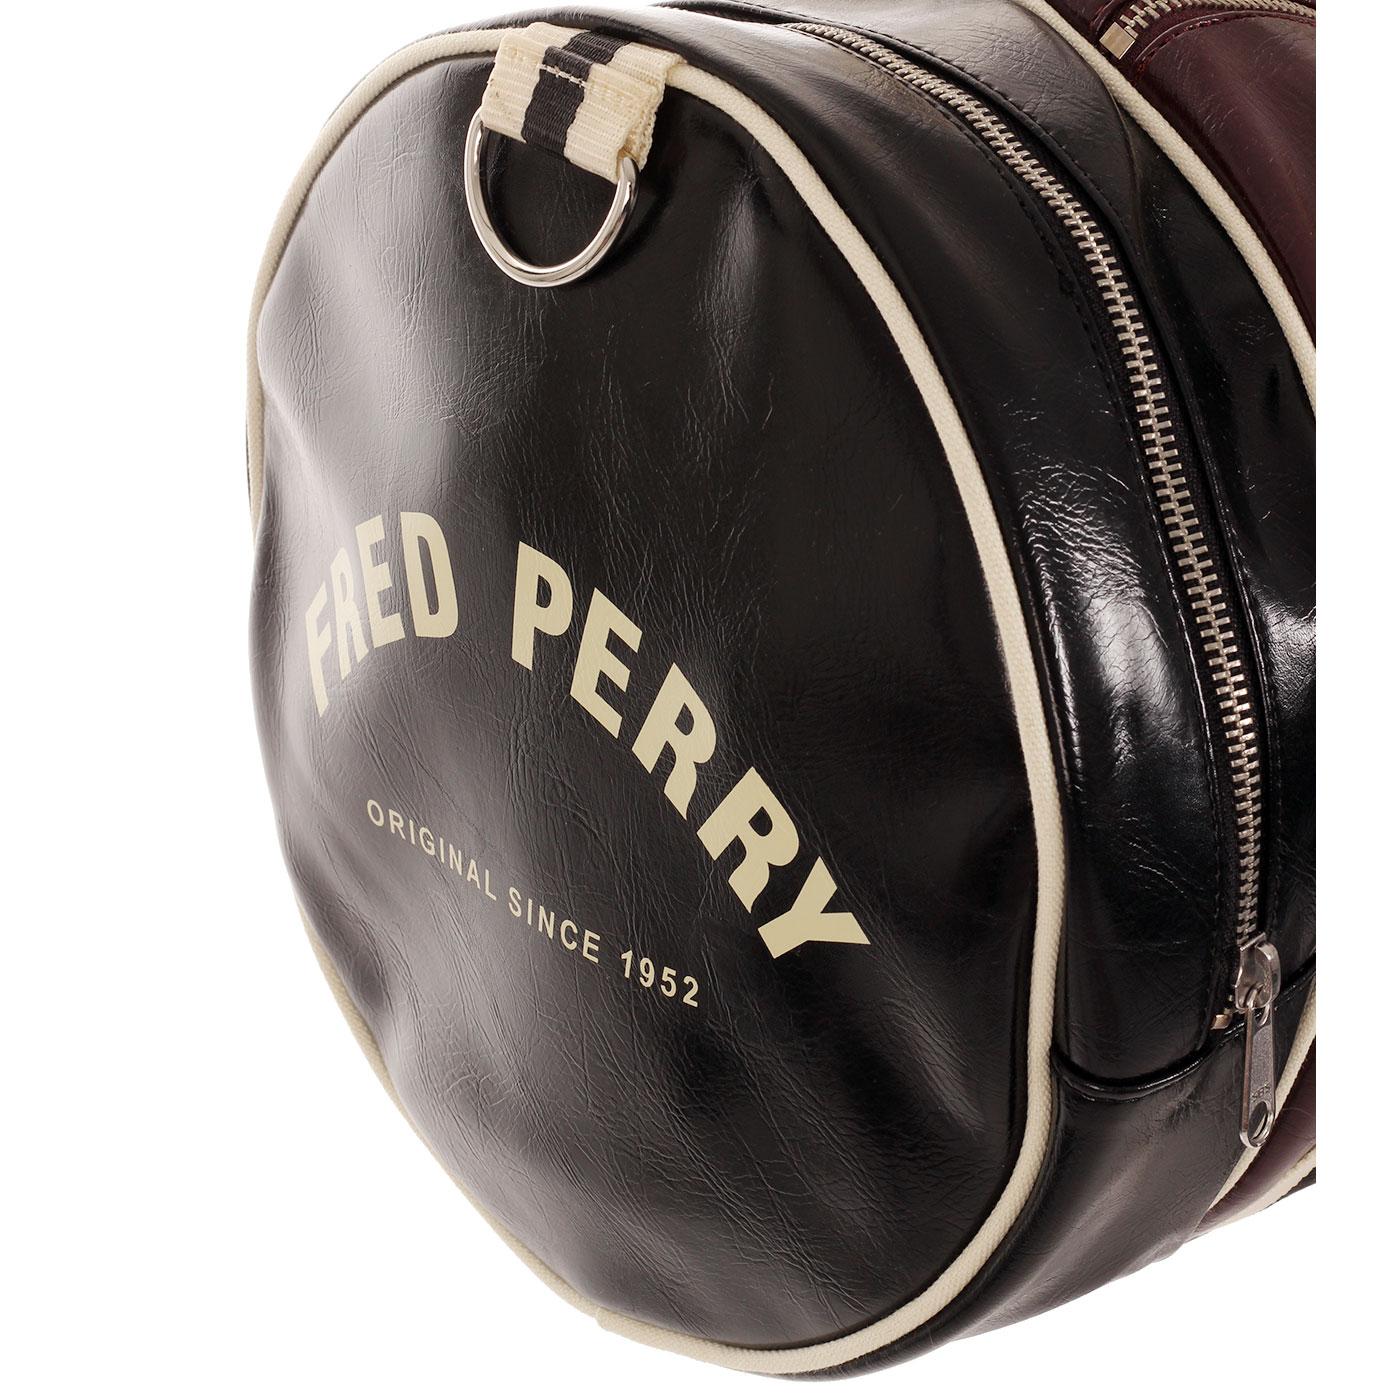 FRED PERRY Retro Colour Block Barrel Bag in Maroon & Black